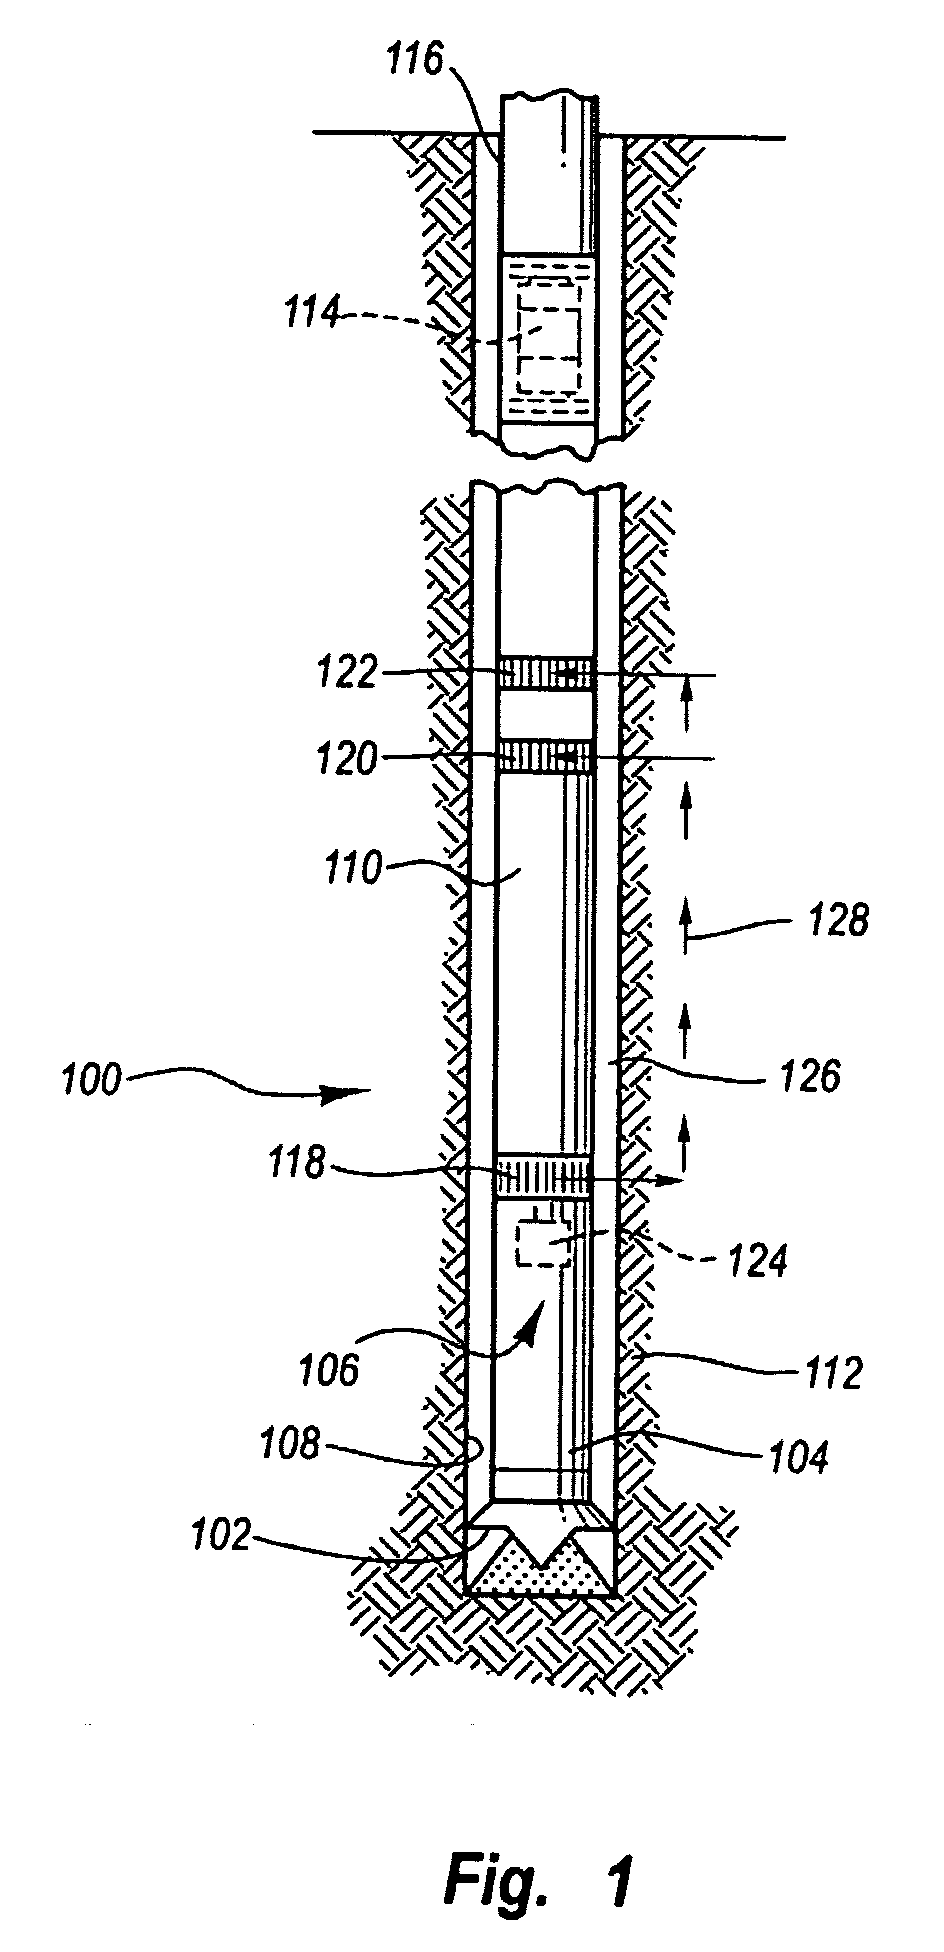 Multi-pole transmitter source